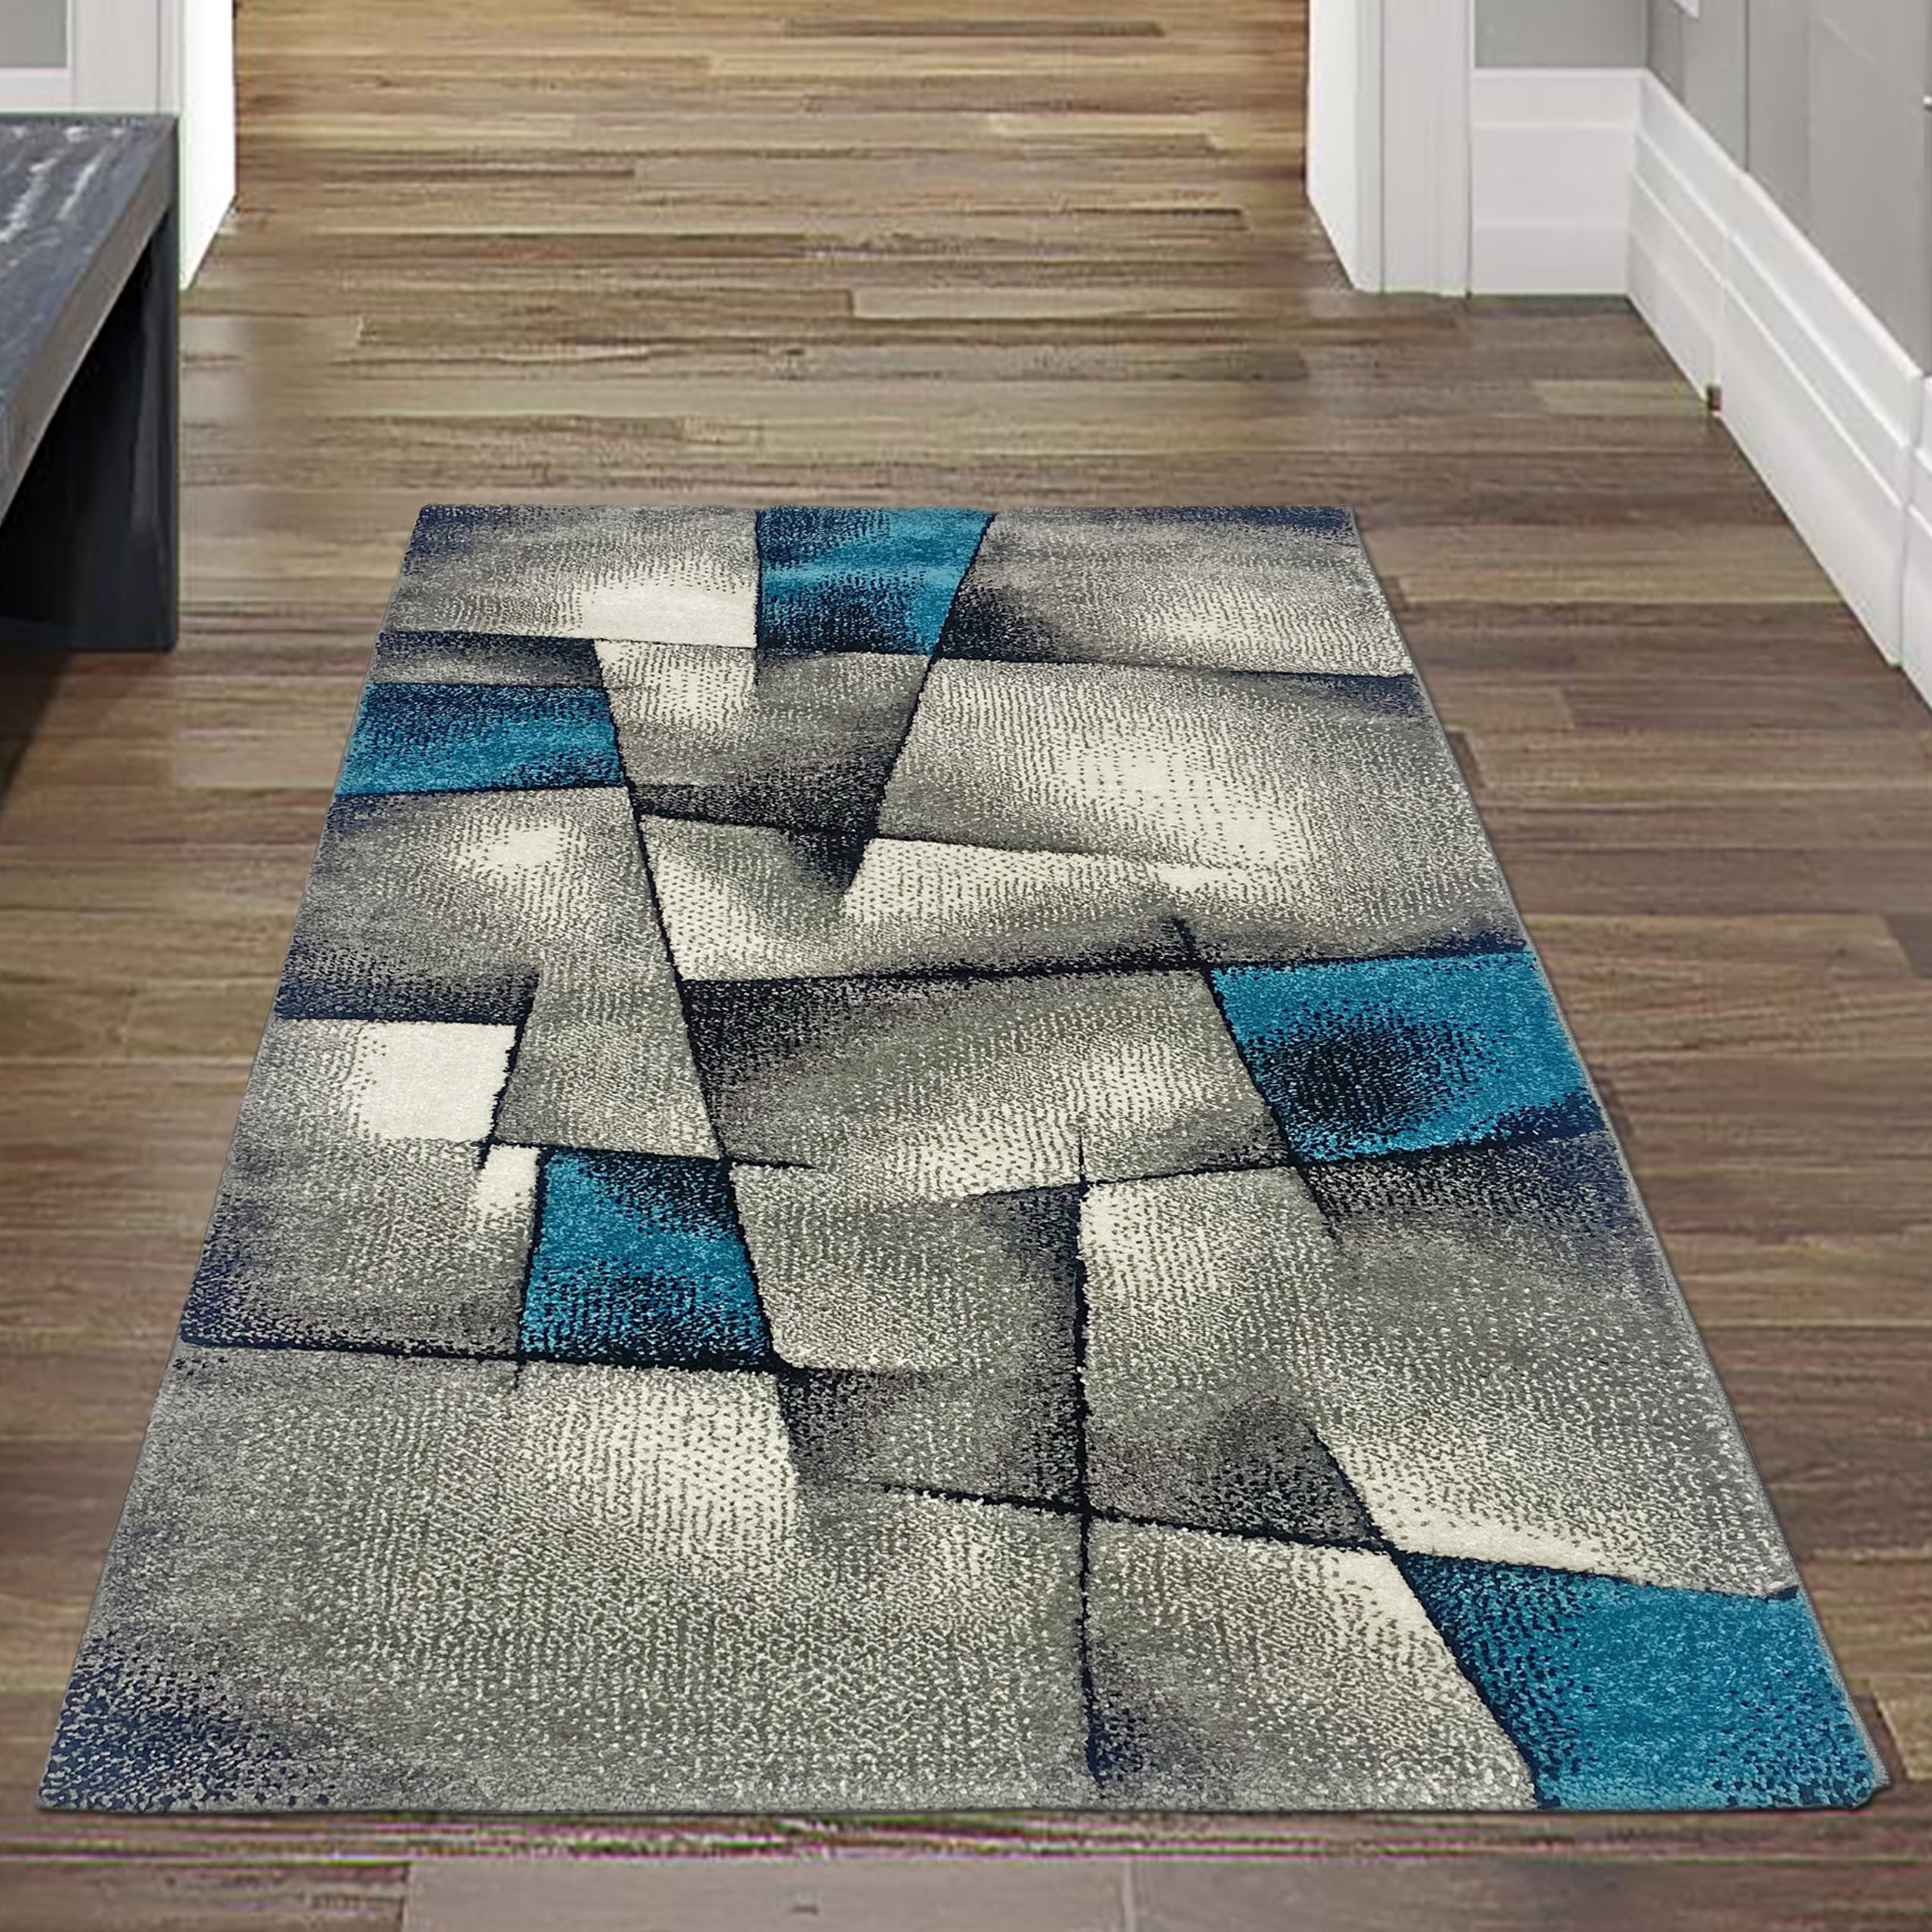 Modern & dreams carpet Teppich designer High-quality -Traum and cheap - carpets: at